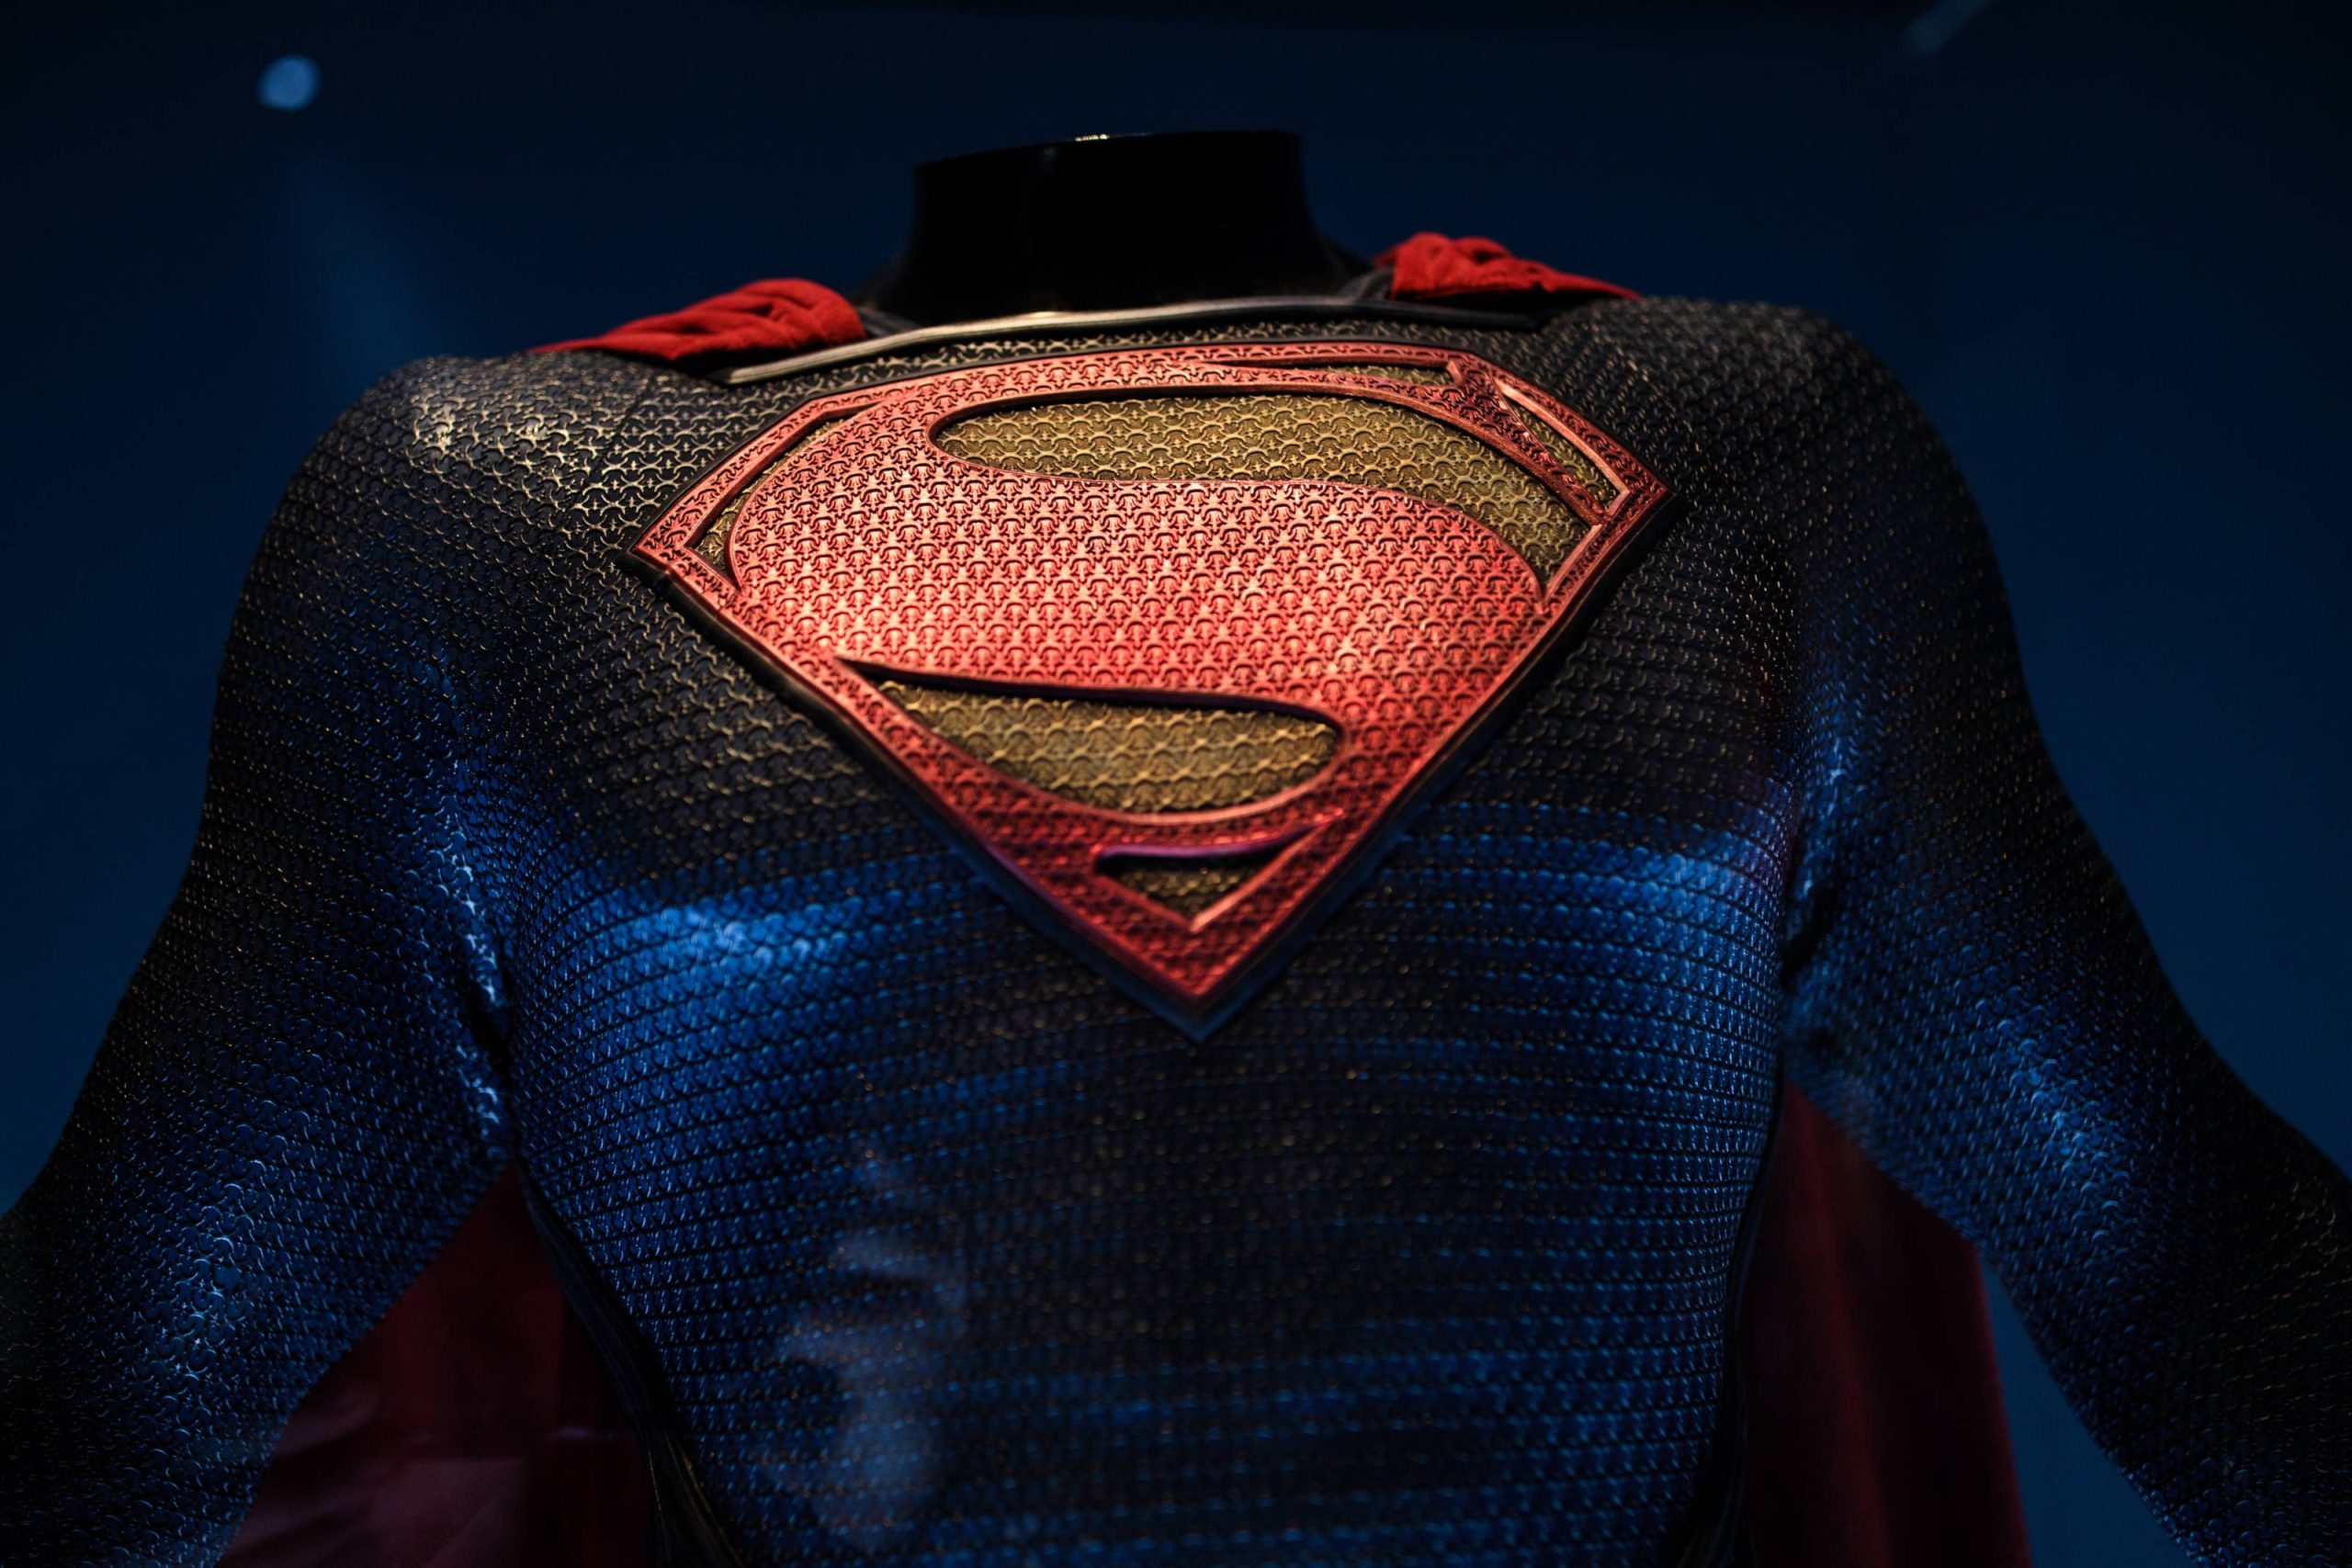 David Corenswet's Stunning Look Sparks Superman Debates: The Next Henry Cavill?